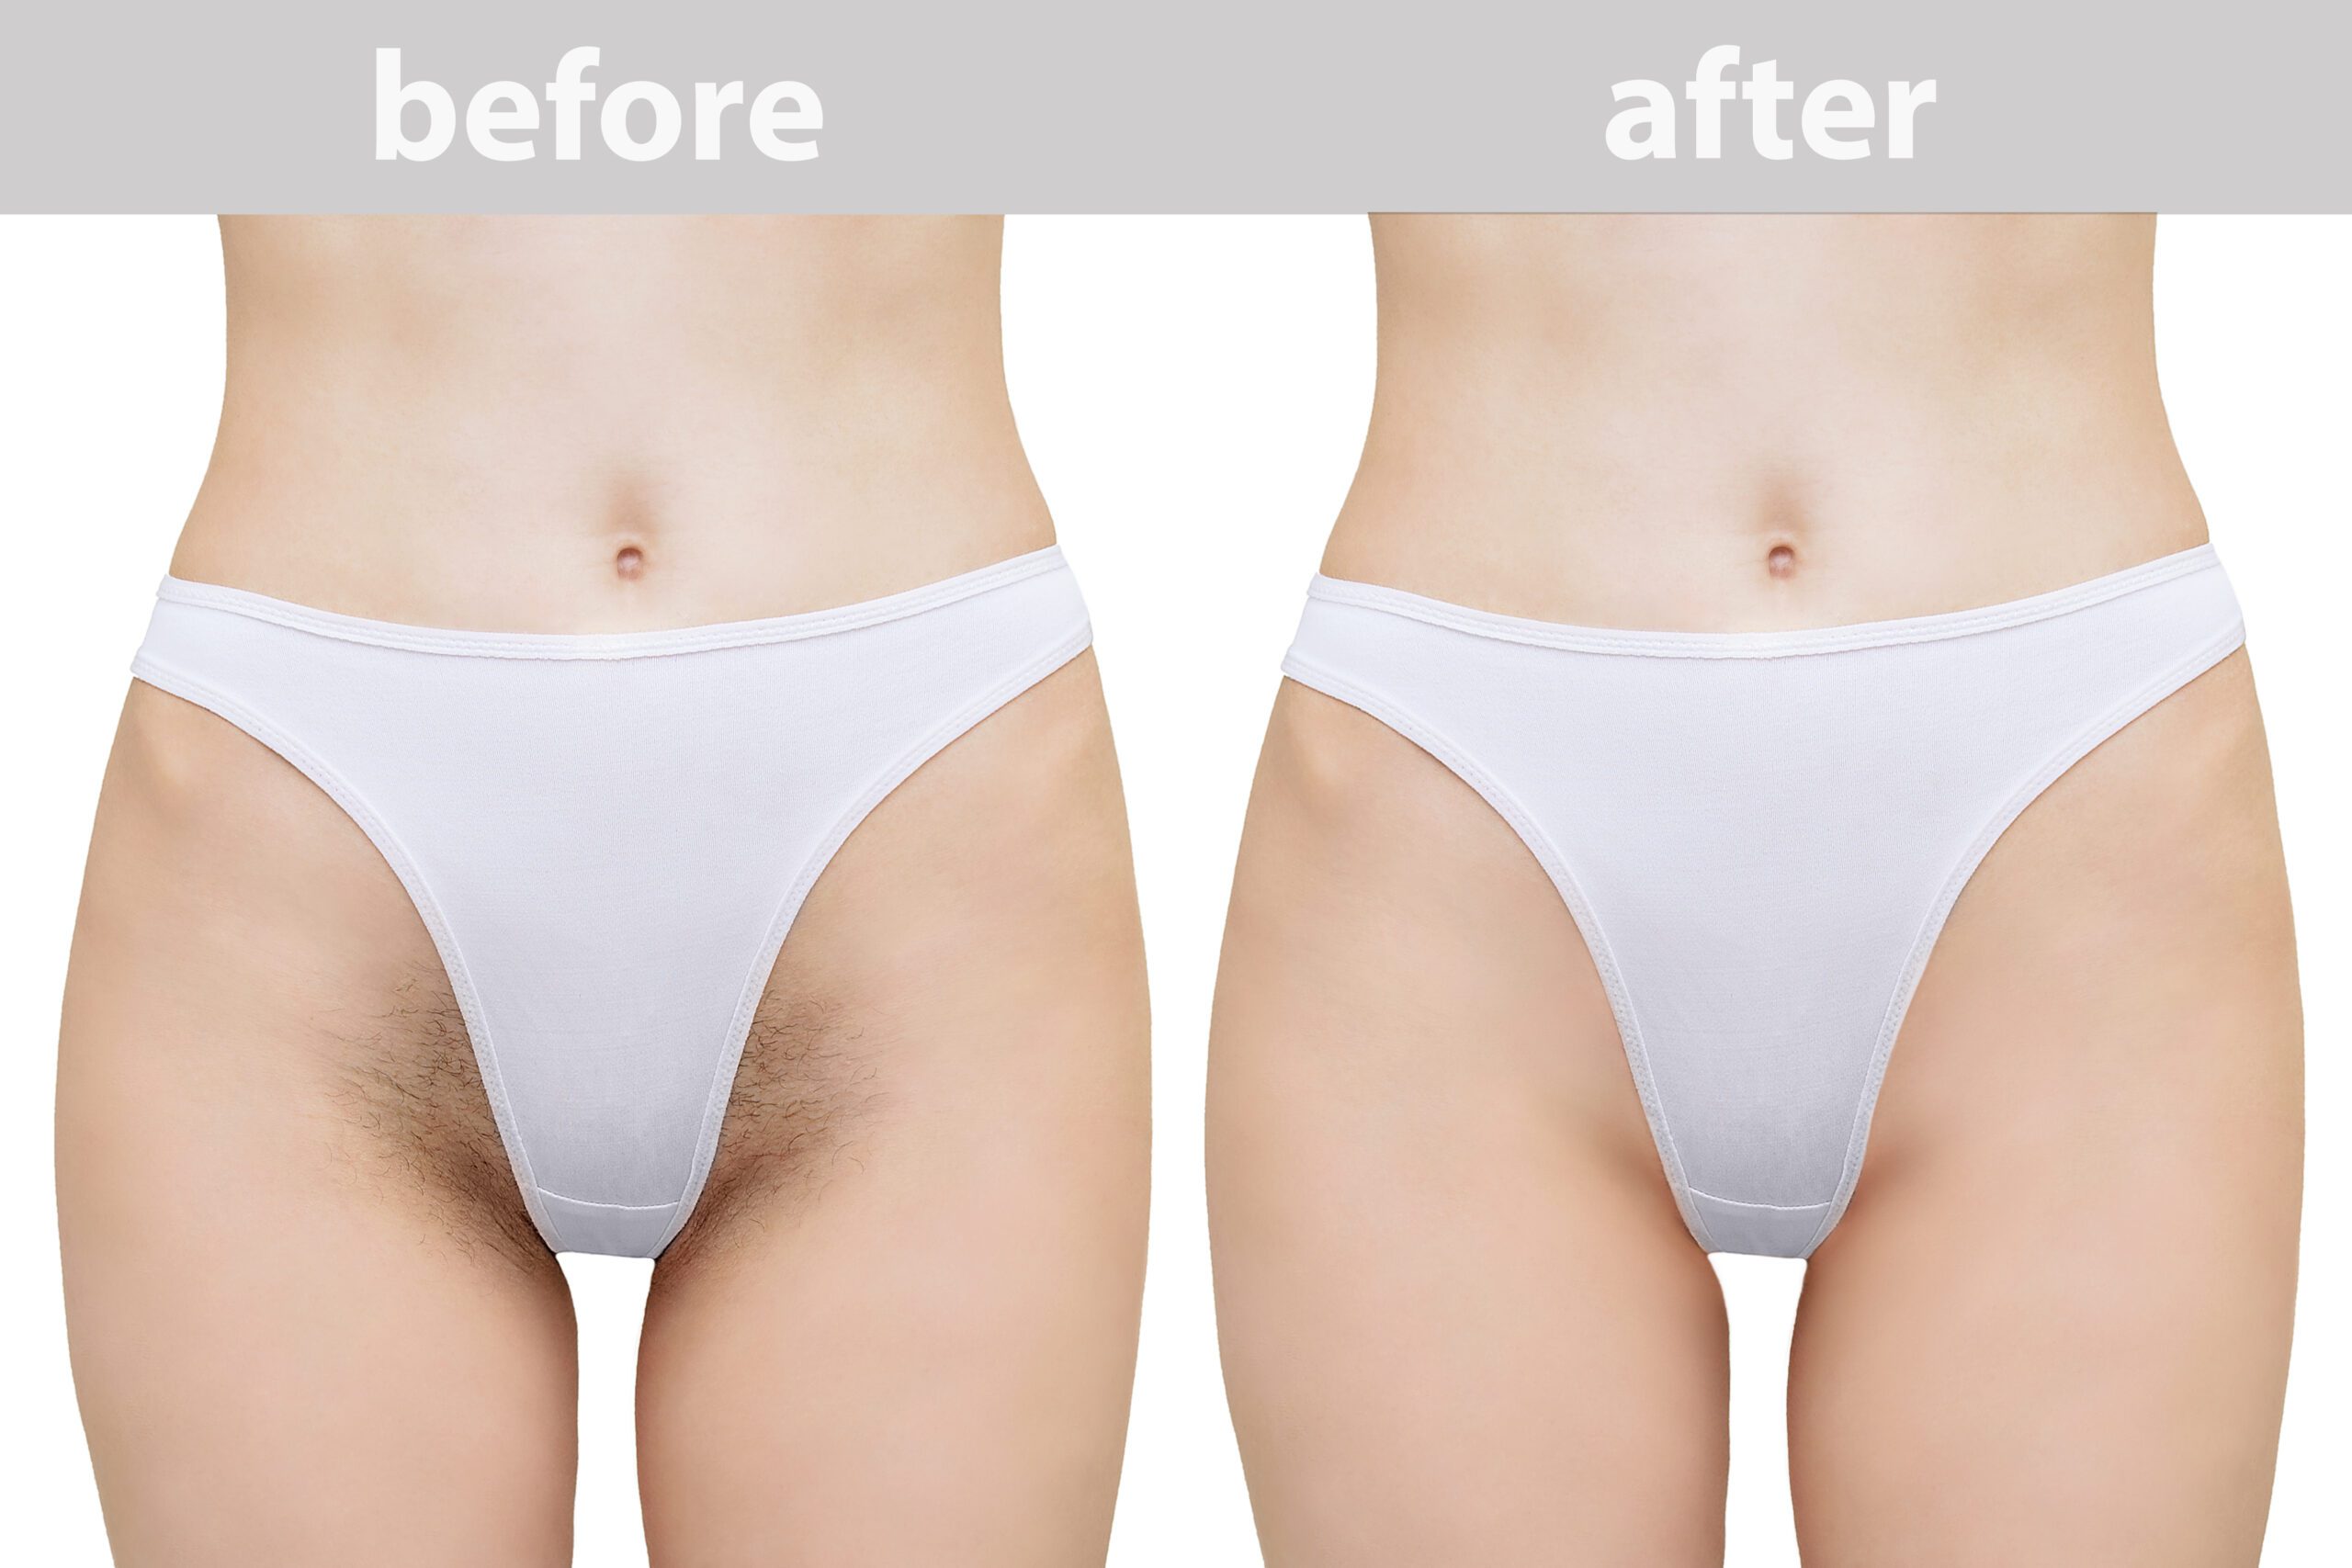 bikini waxing before and after